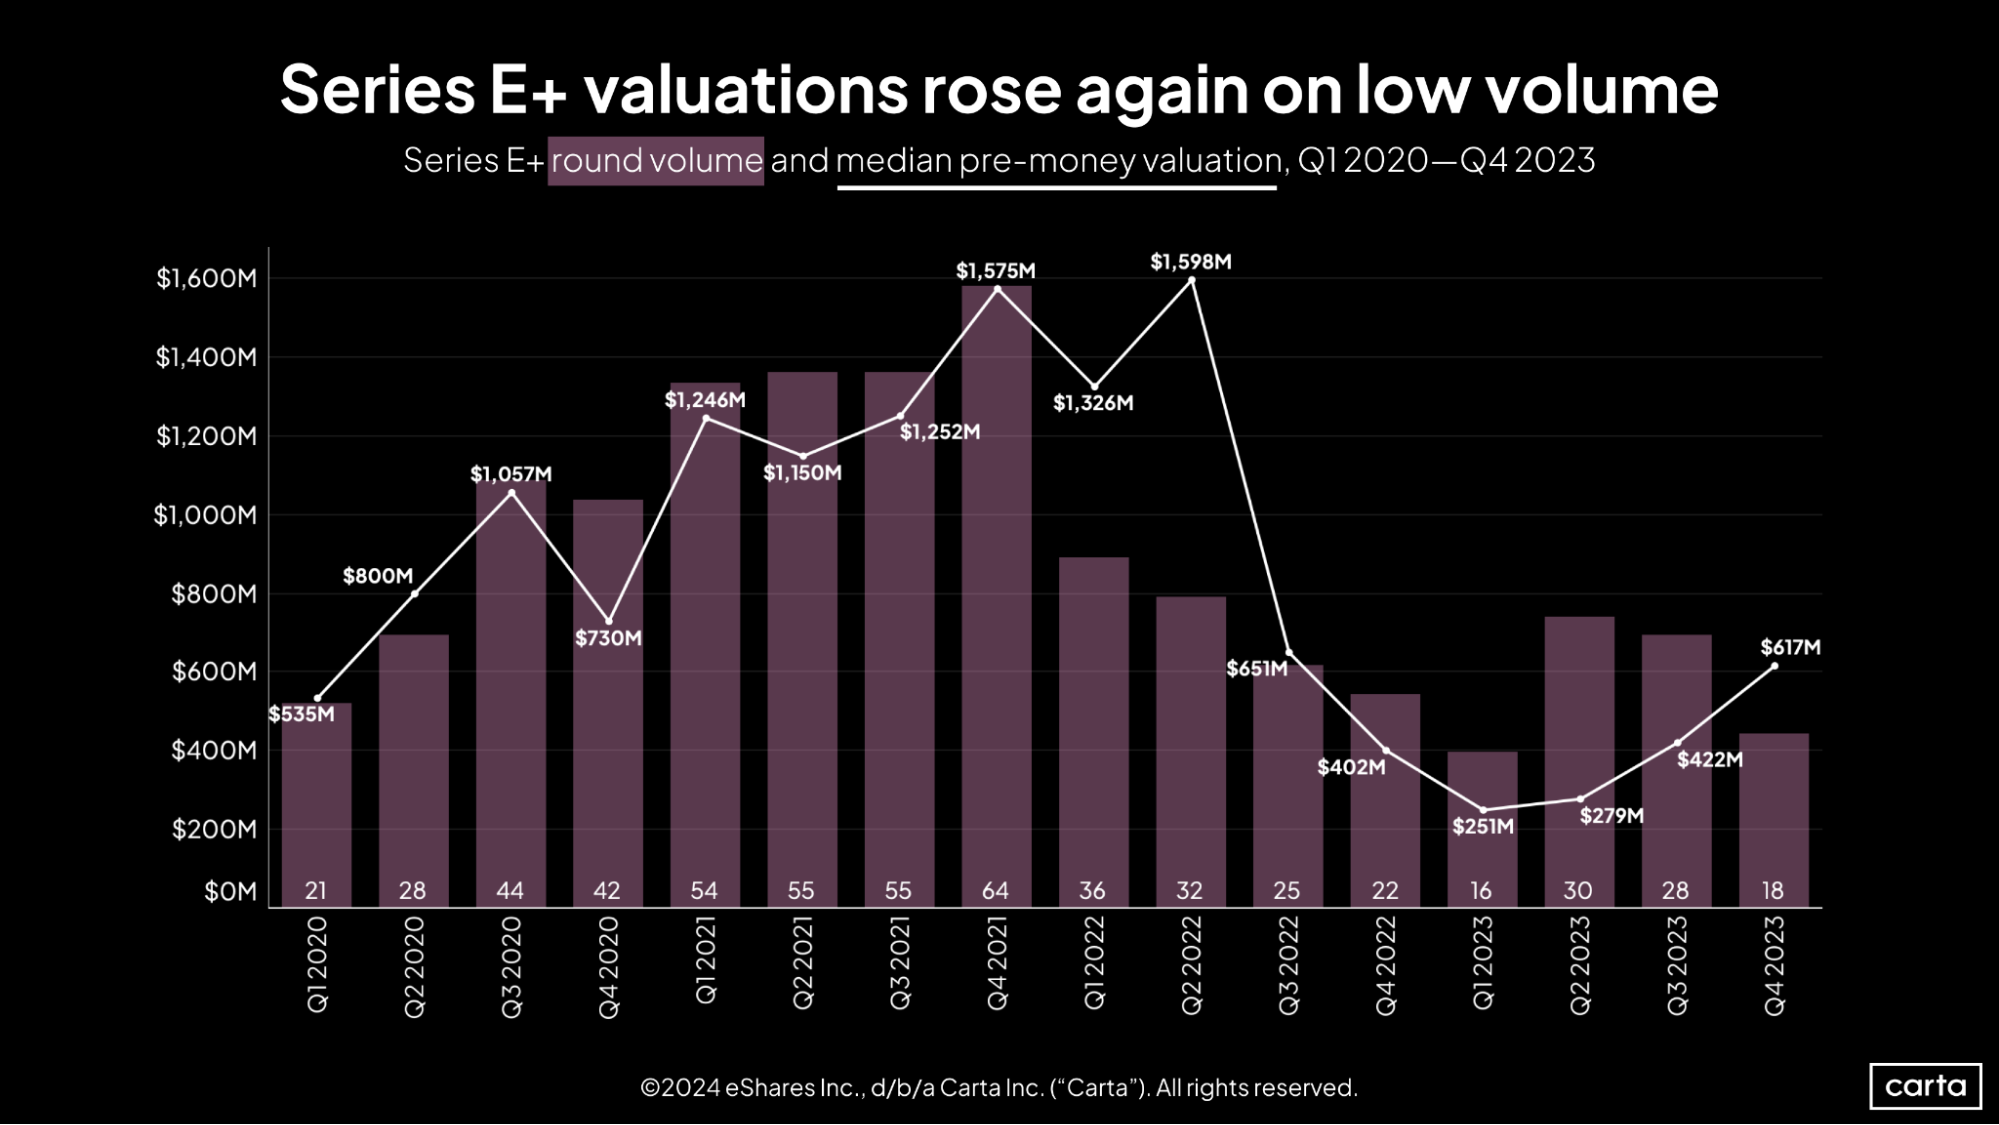 Carta SOPM Q4 2023 Series E+ valuations rose again on low volume